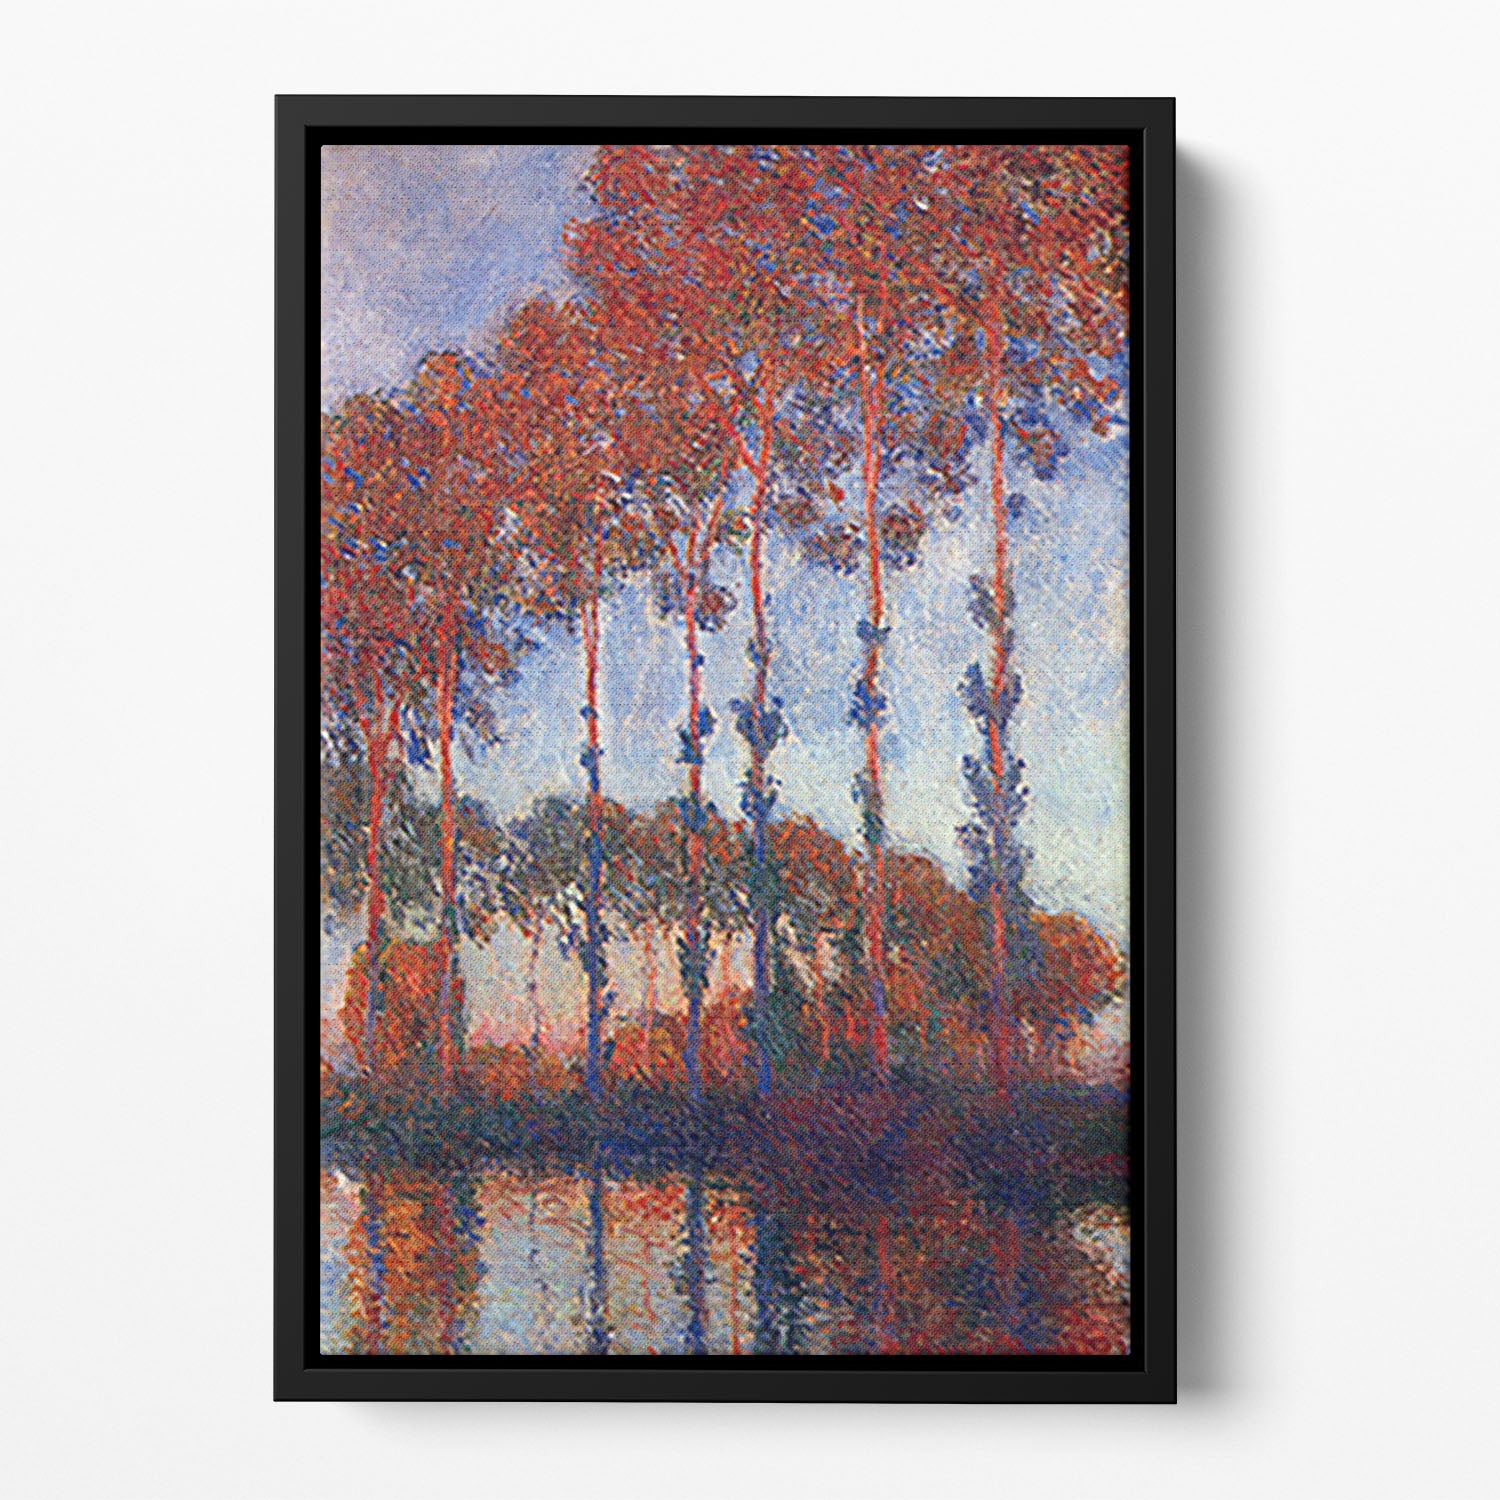 Poplars by Monet Floating Framed Canvas